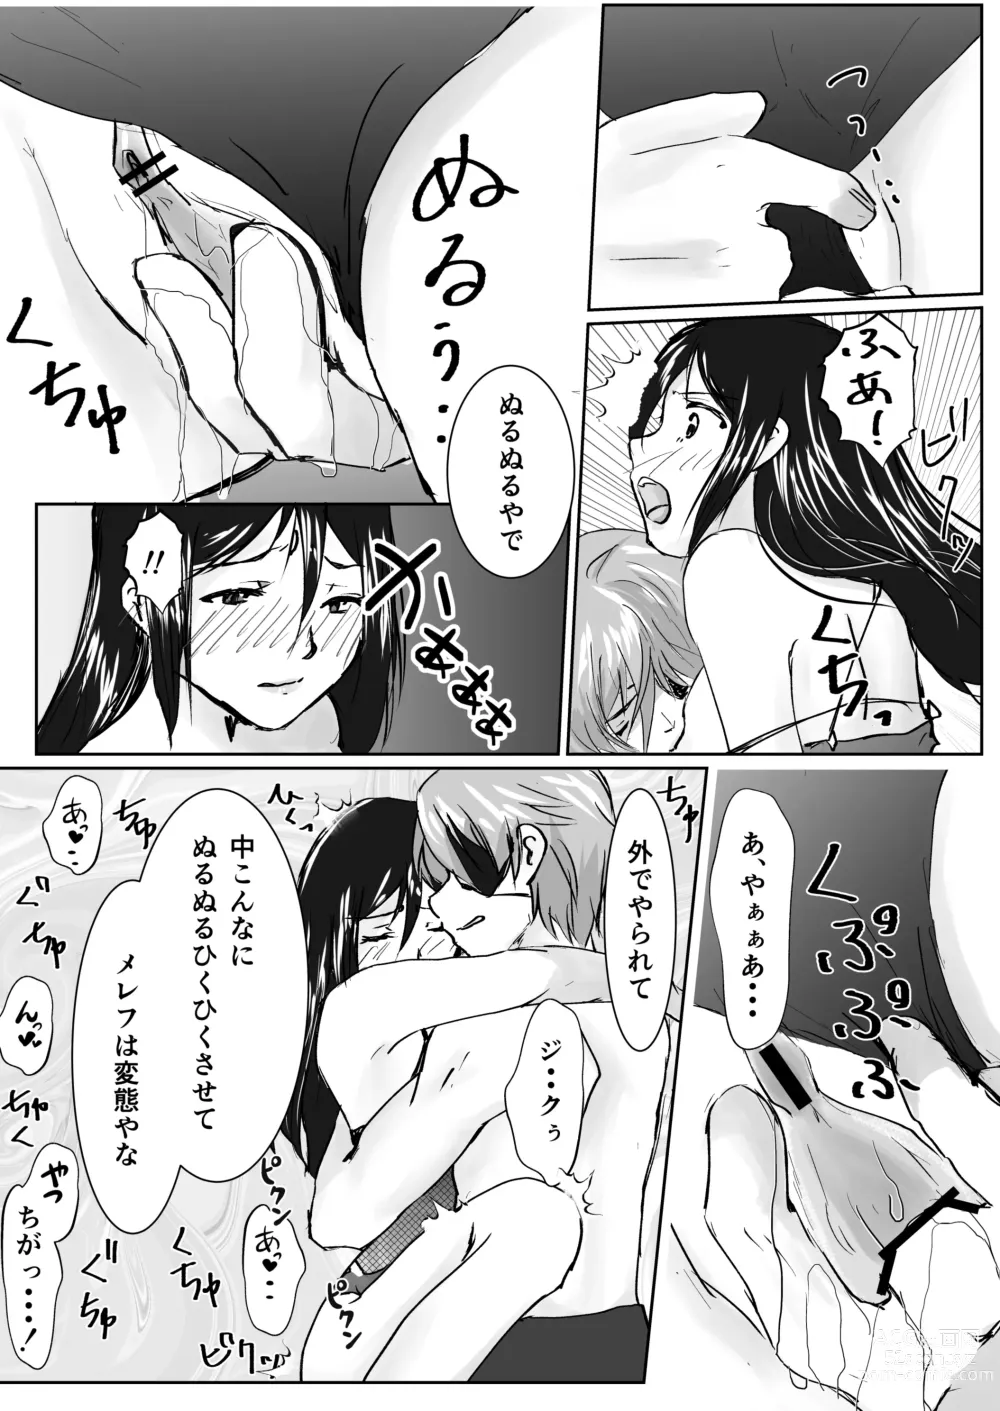 Page 12 of doujinshi Jikumere Ecchi Manga Matome